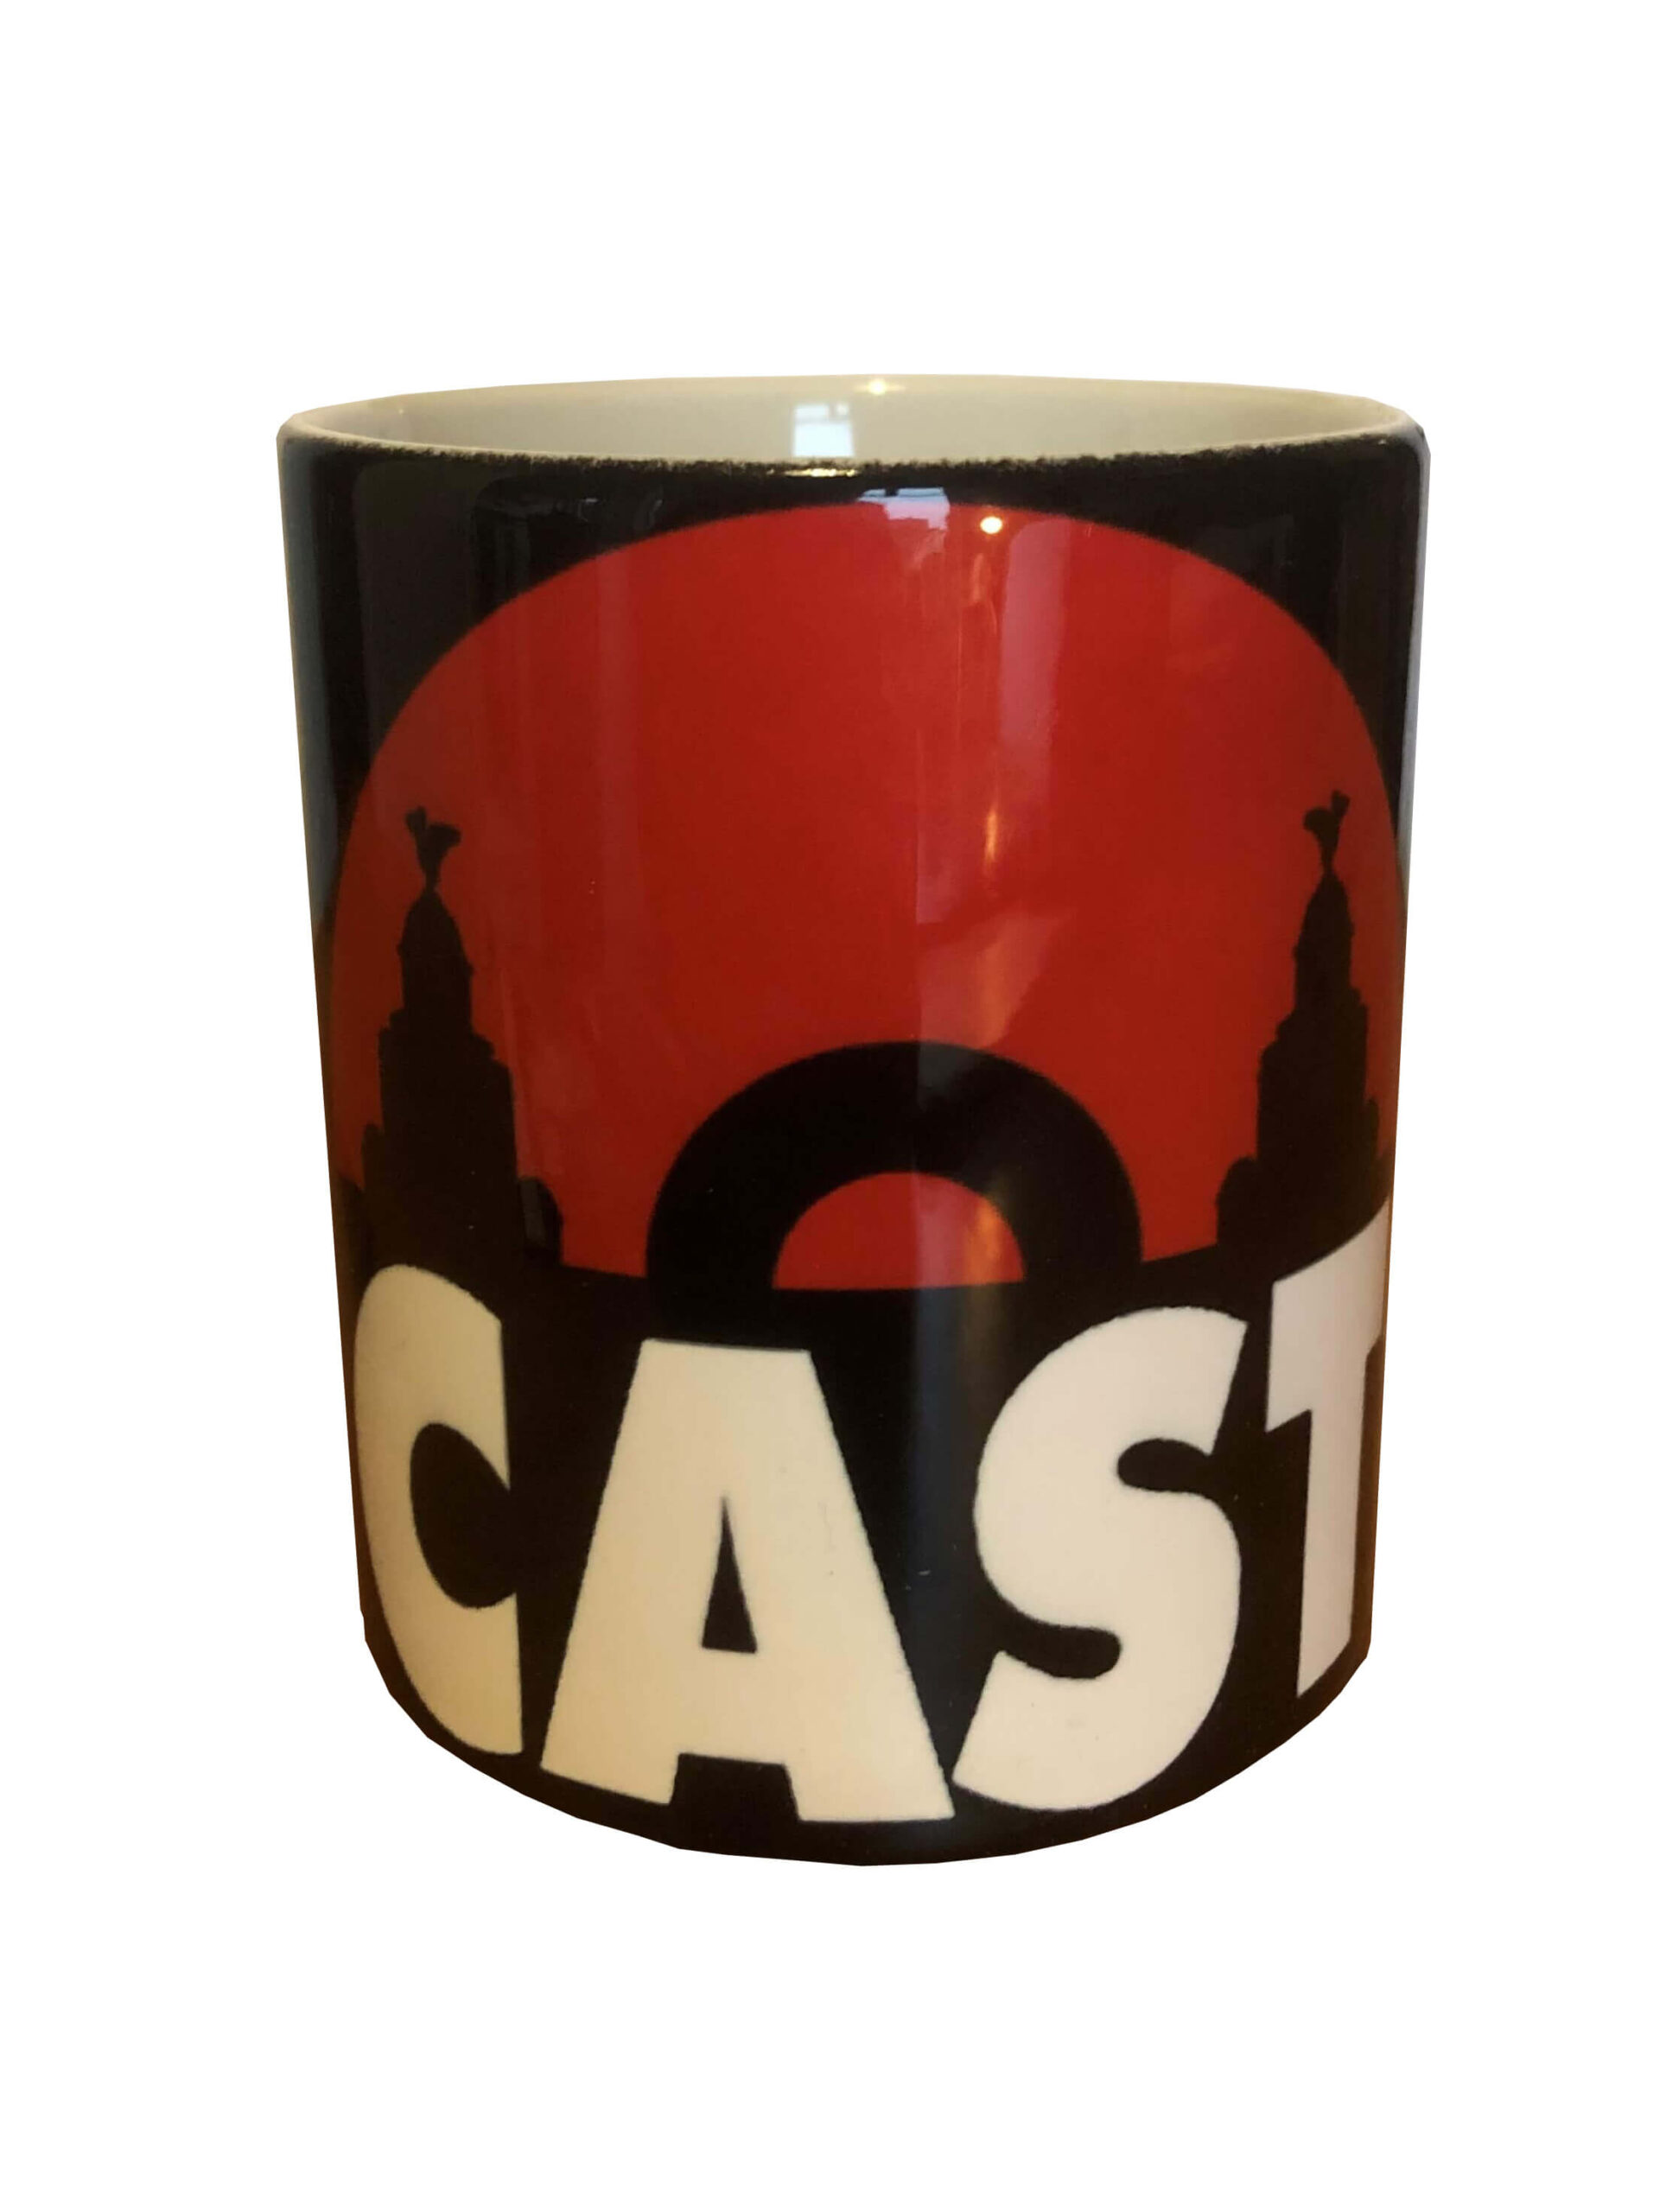 Cast mug - black